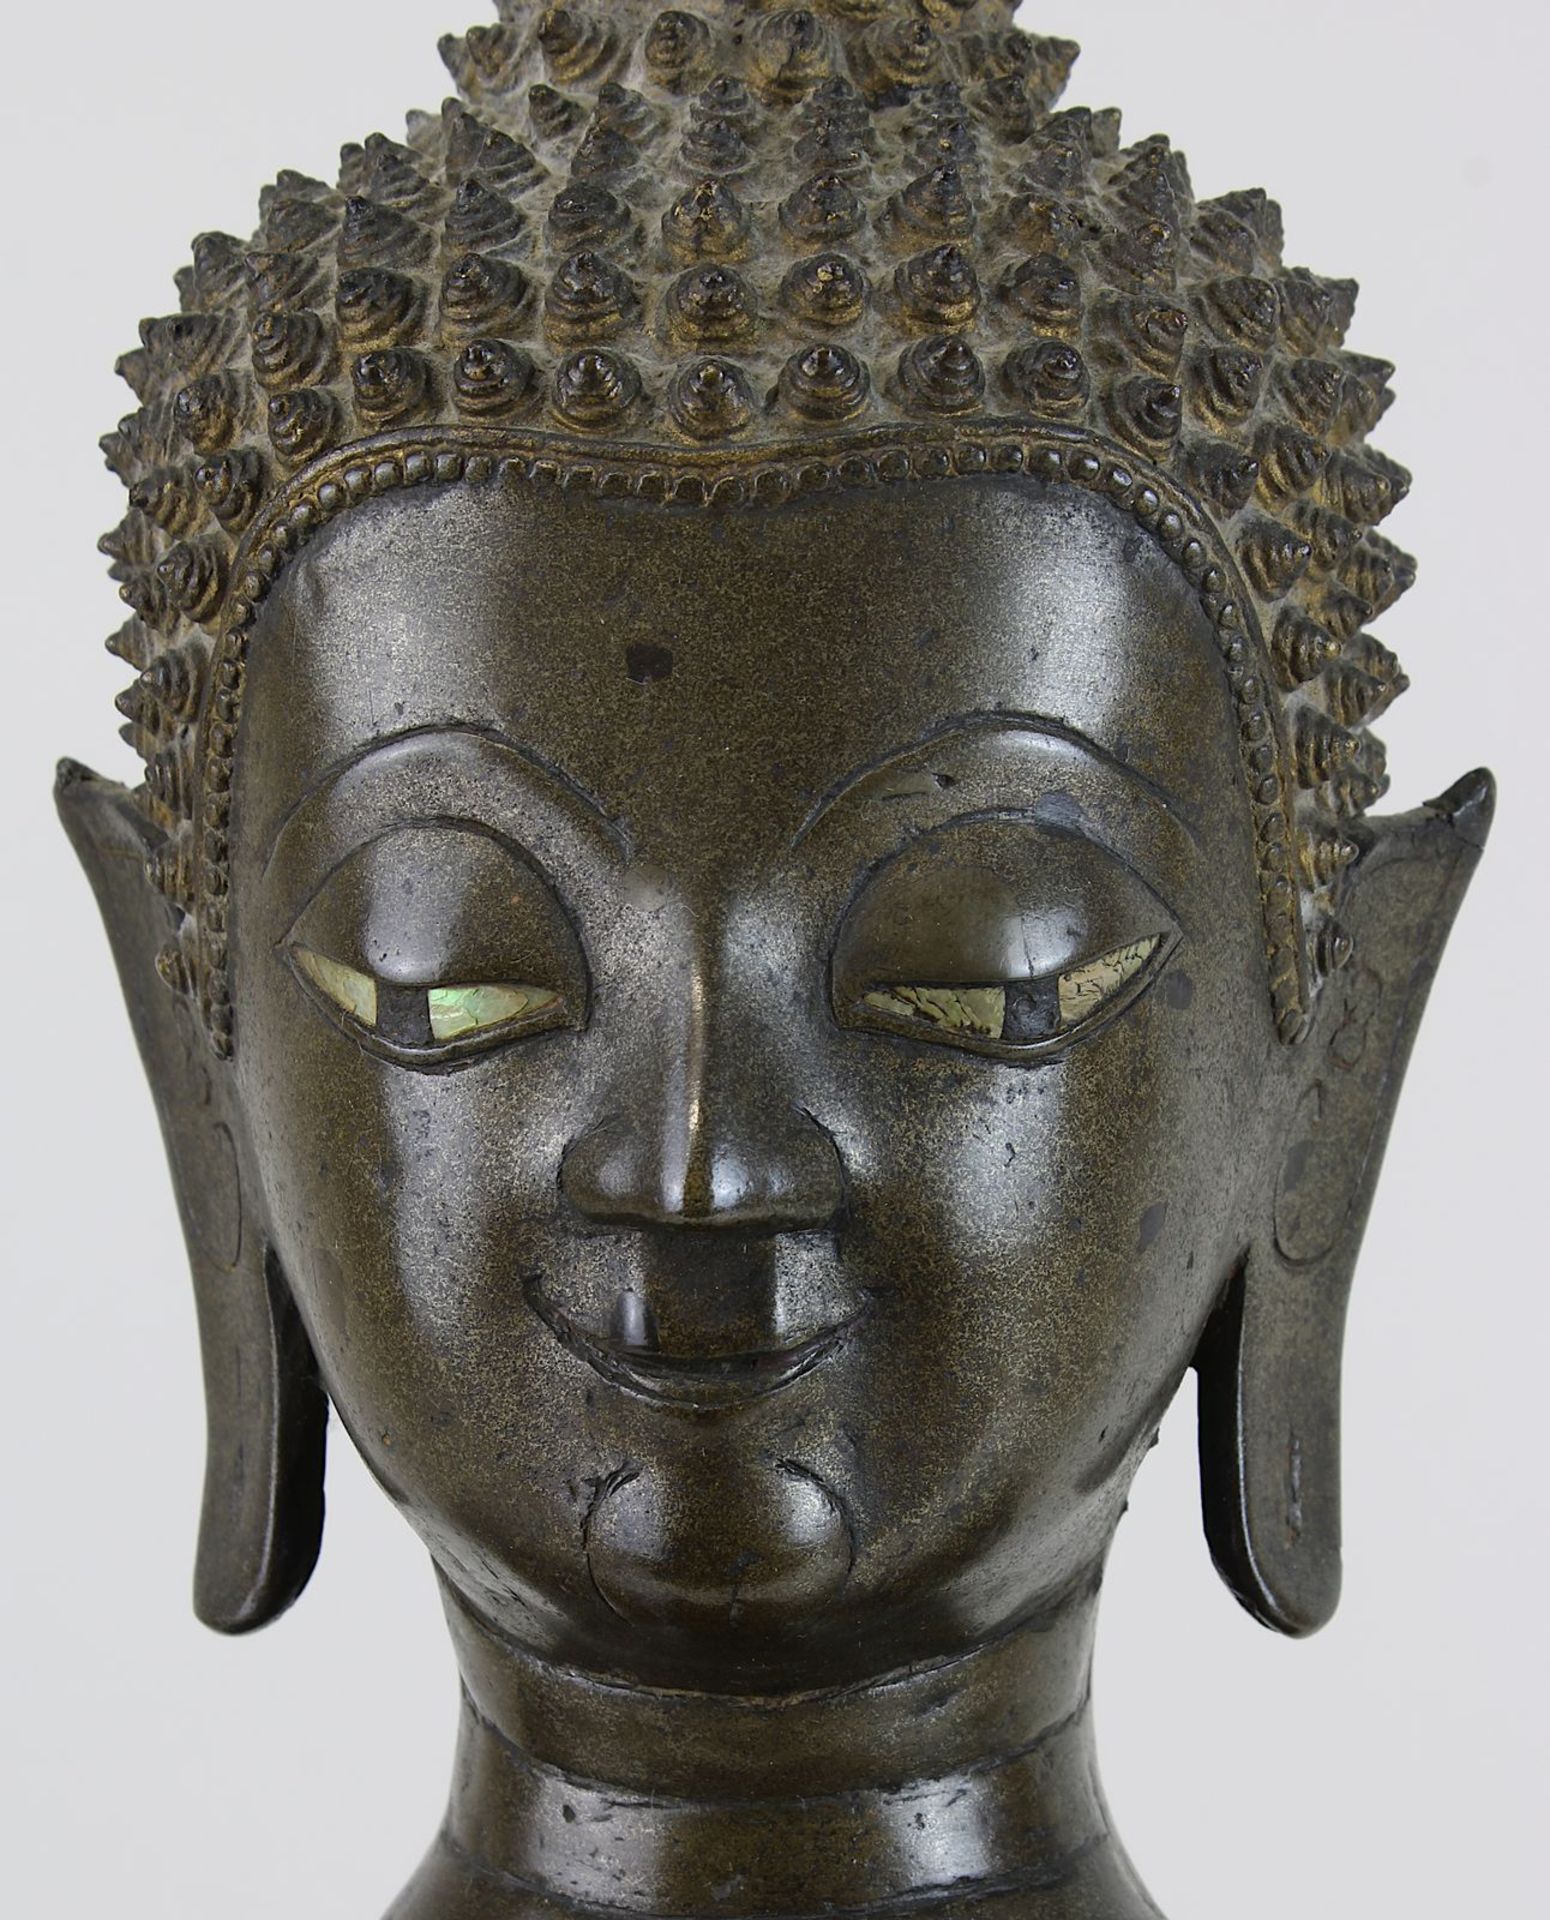 Großer Bronze-Buddha, Siam wohl um 1800, Buddha in Meditationshaltung auf glattem mehreckigem Sockel - Image 6 of 6